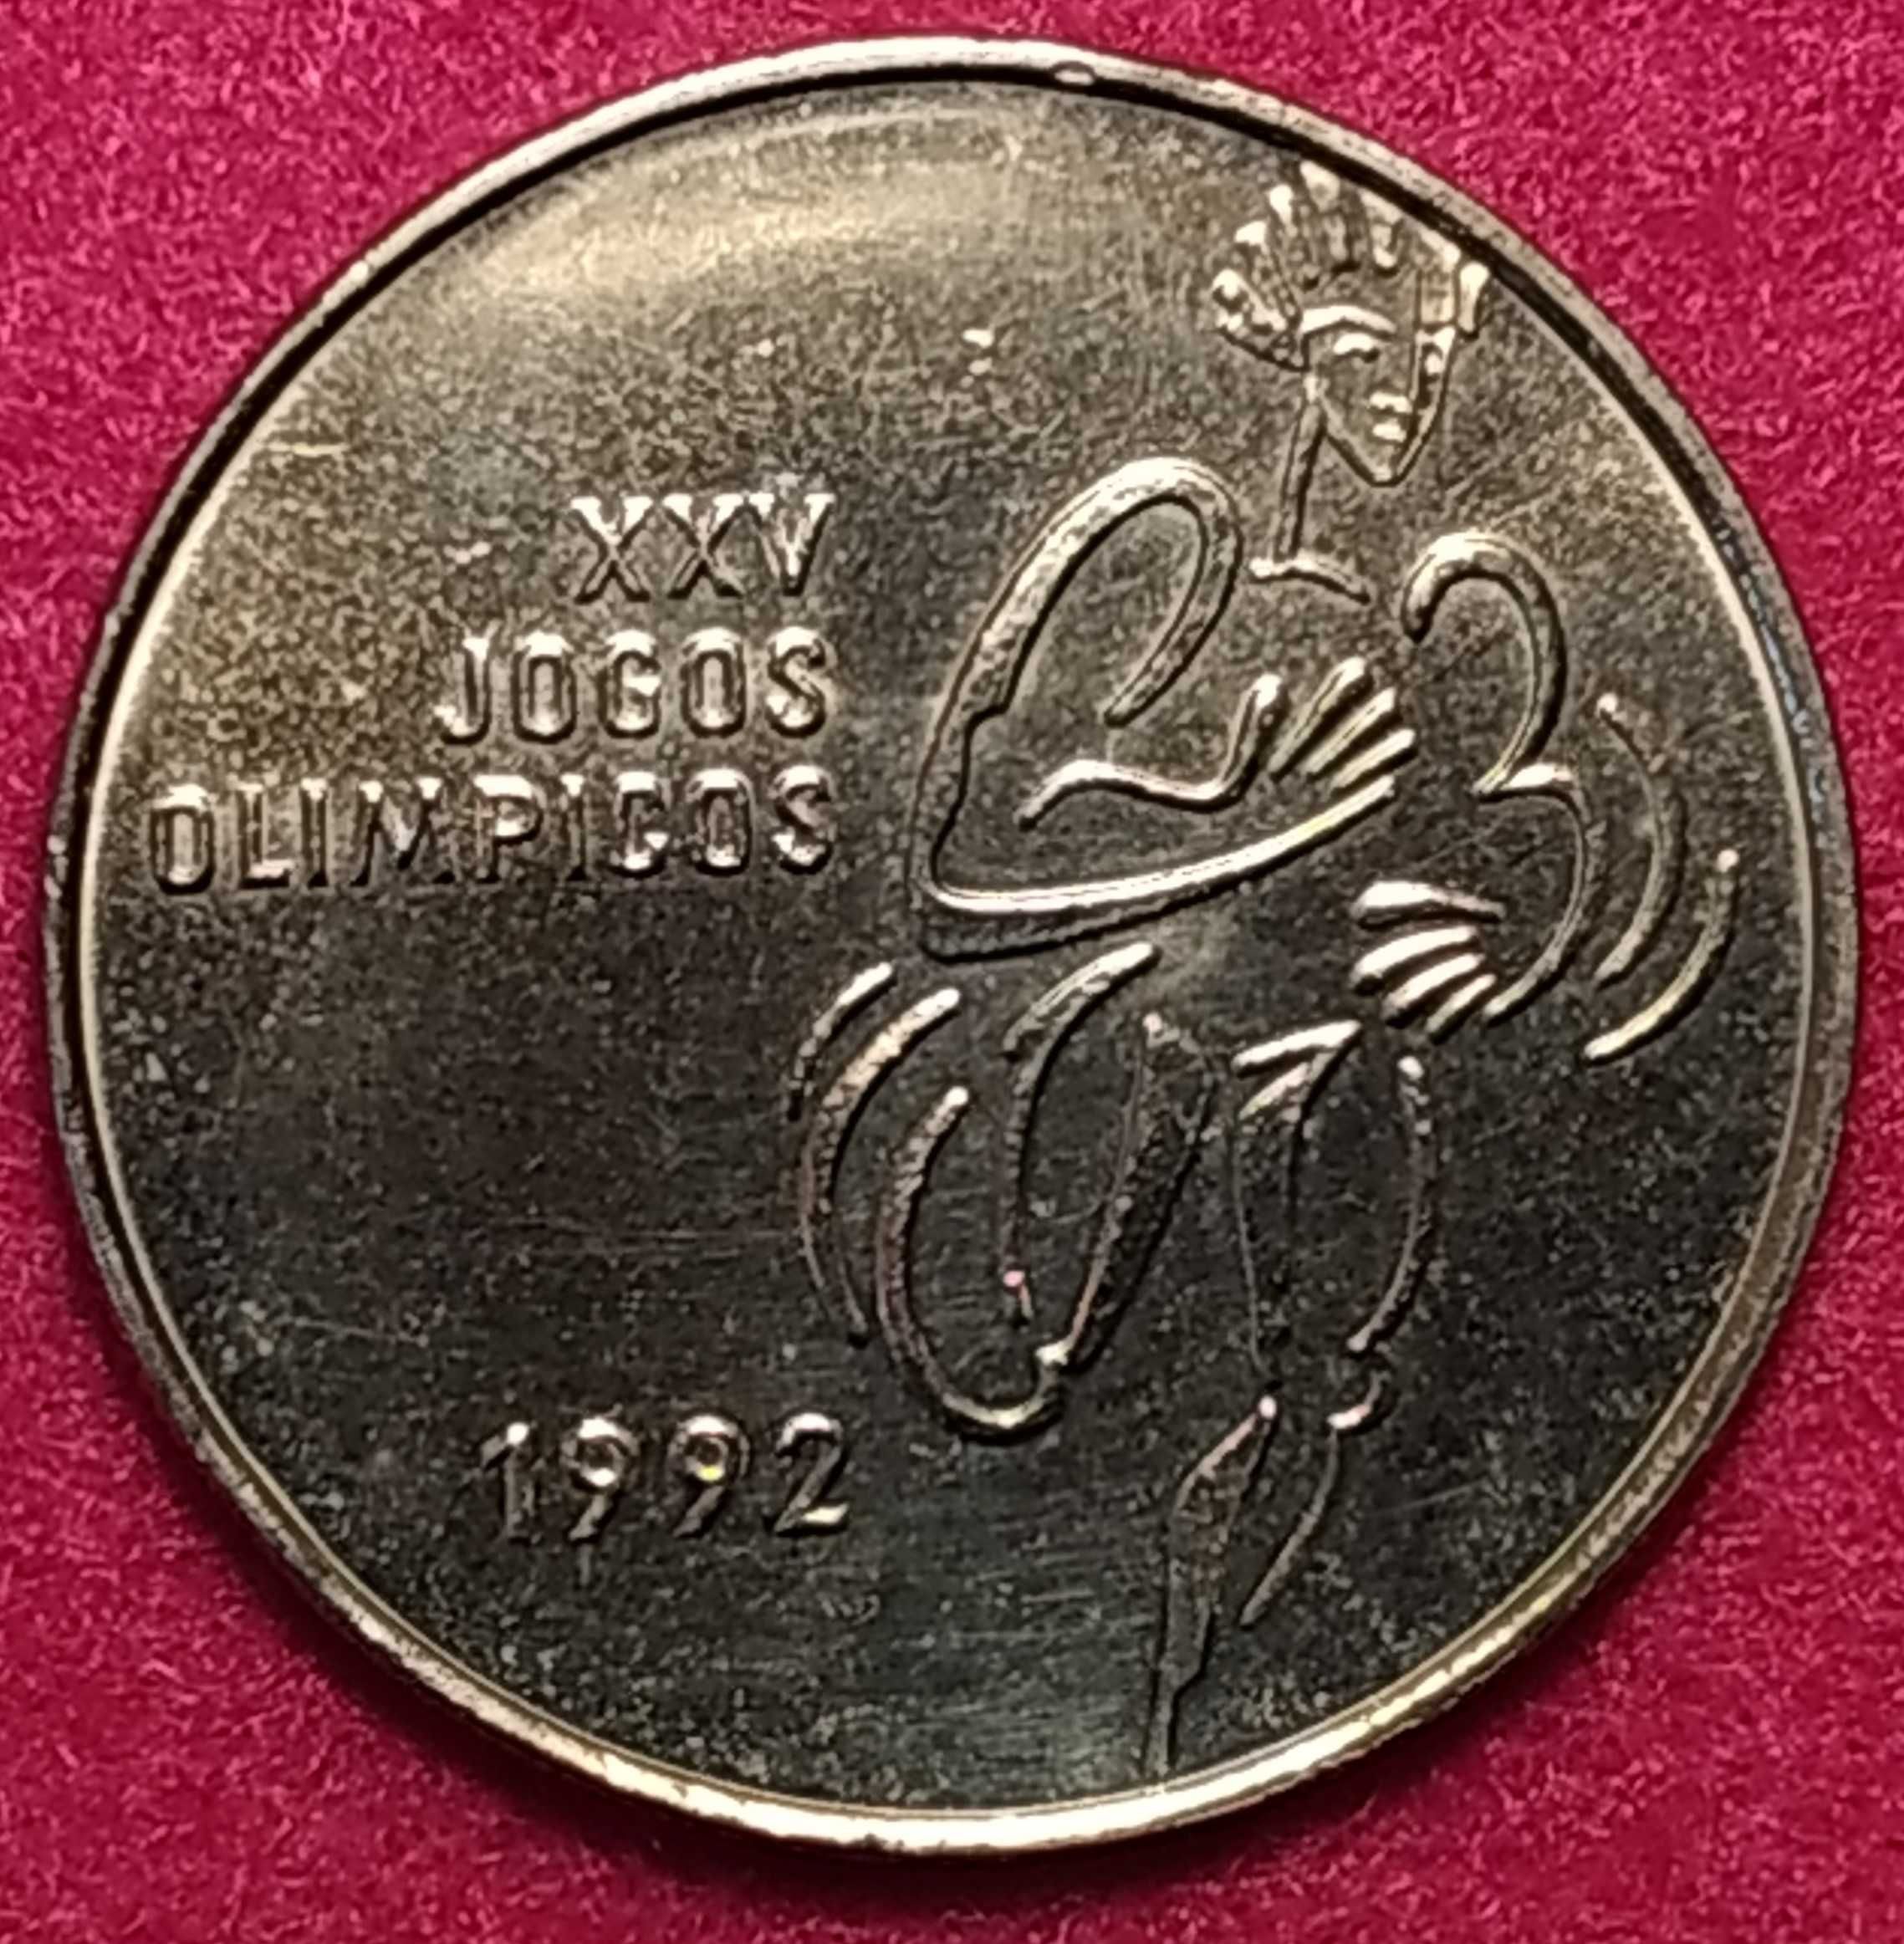 Portugal - moeda de 200 escudos de 1992 Barcelona 92 (desporto)